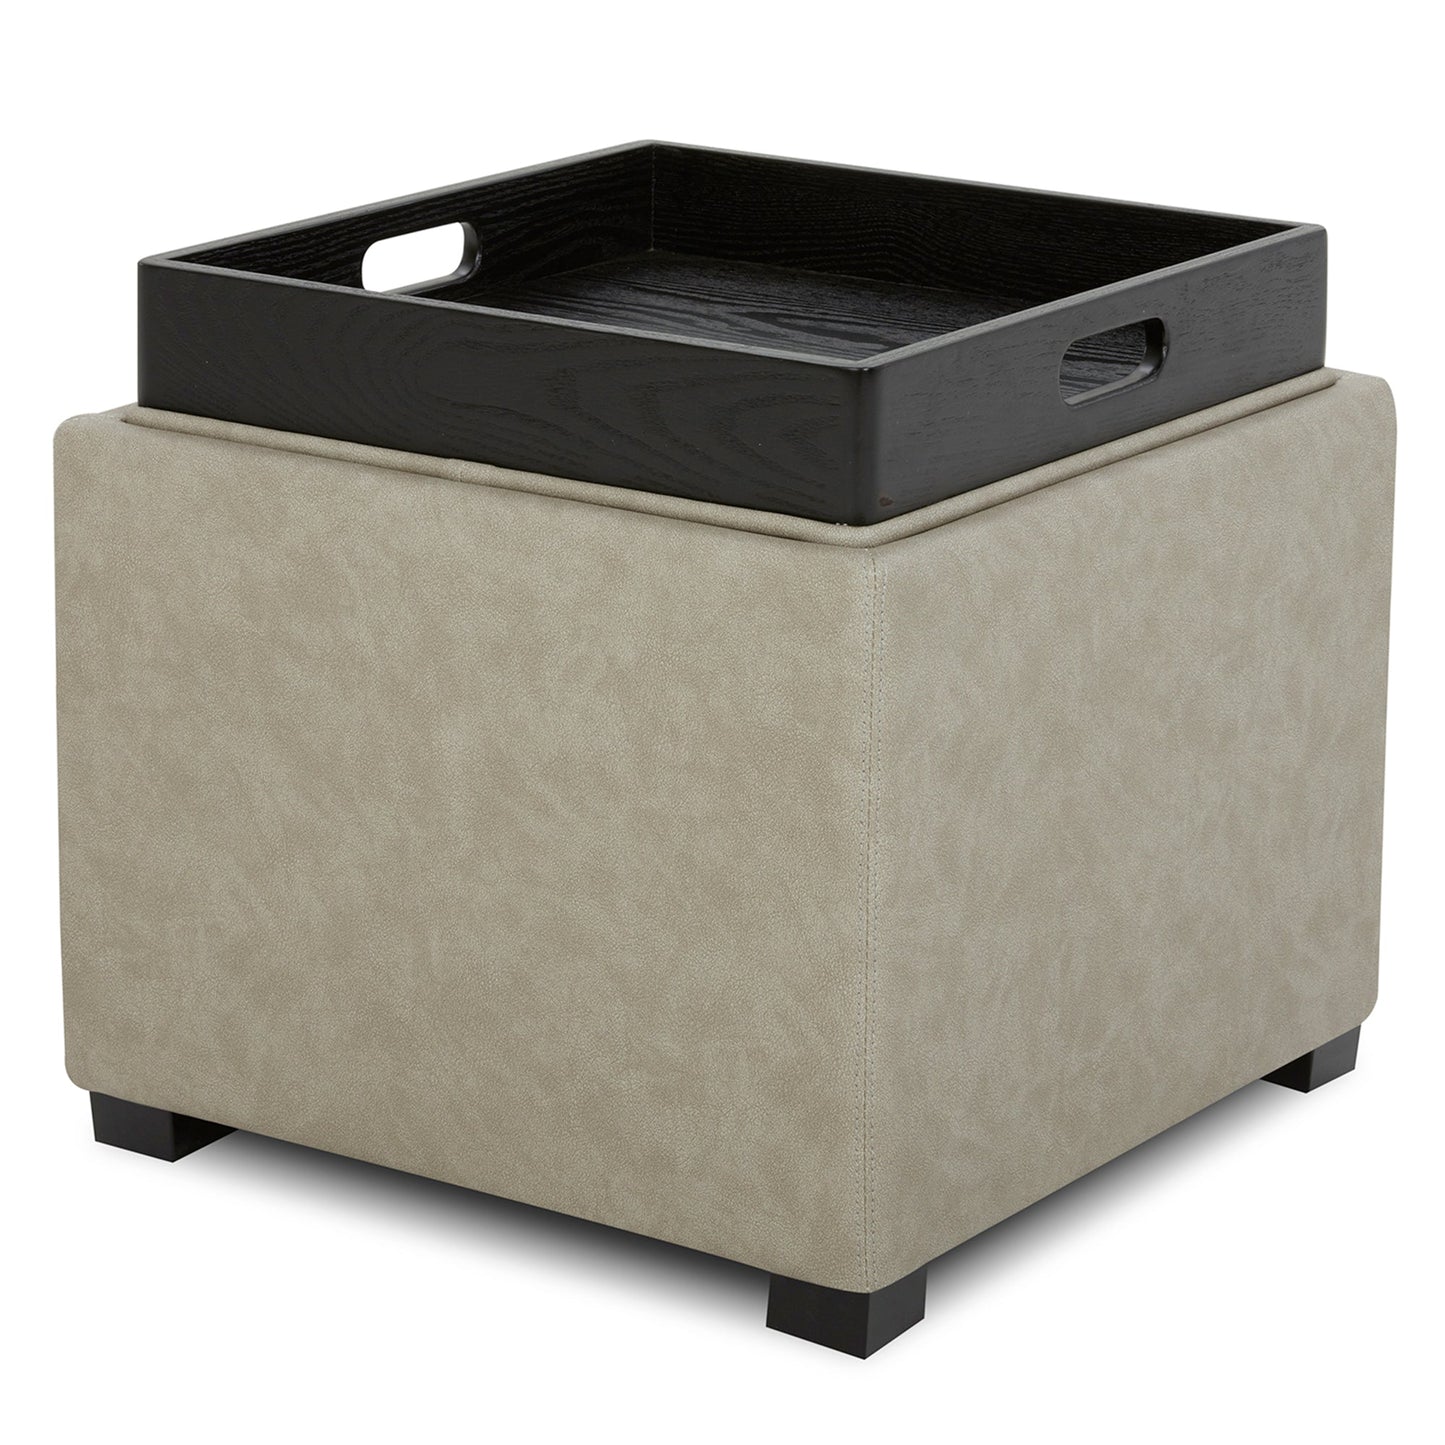 CHITA LIVING-Cube Storage Ottoman - Fabric & Leather-Ottoman-Faux Leather-Stone Gray-